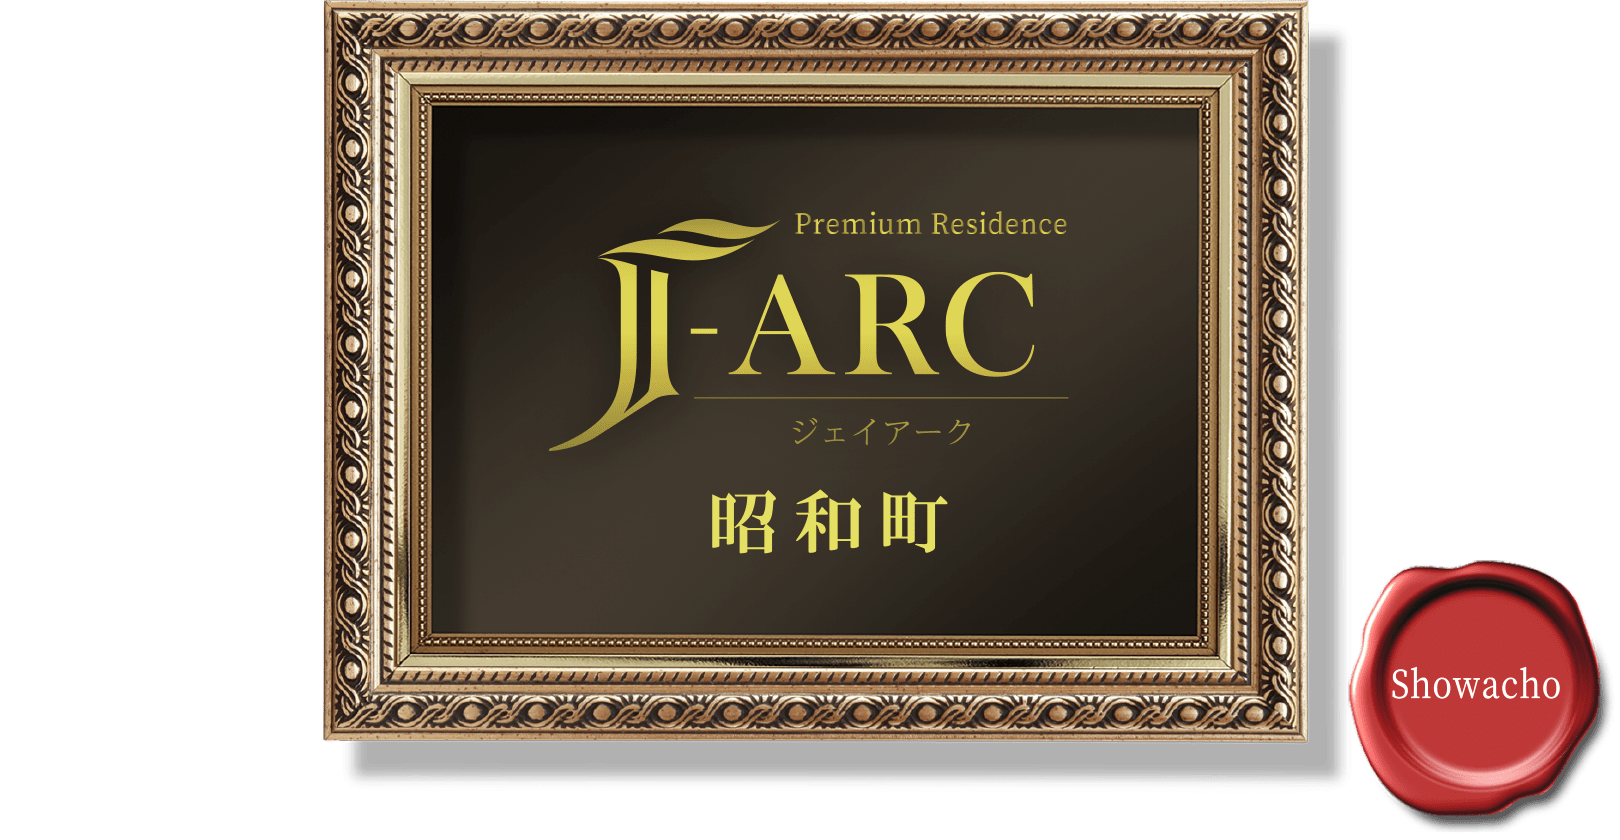 Premium Residence J-ARC 昭和町